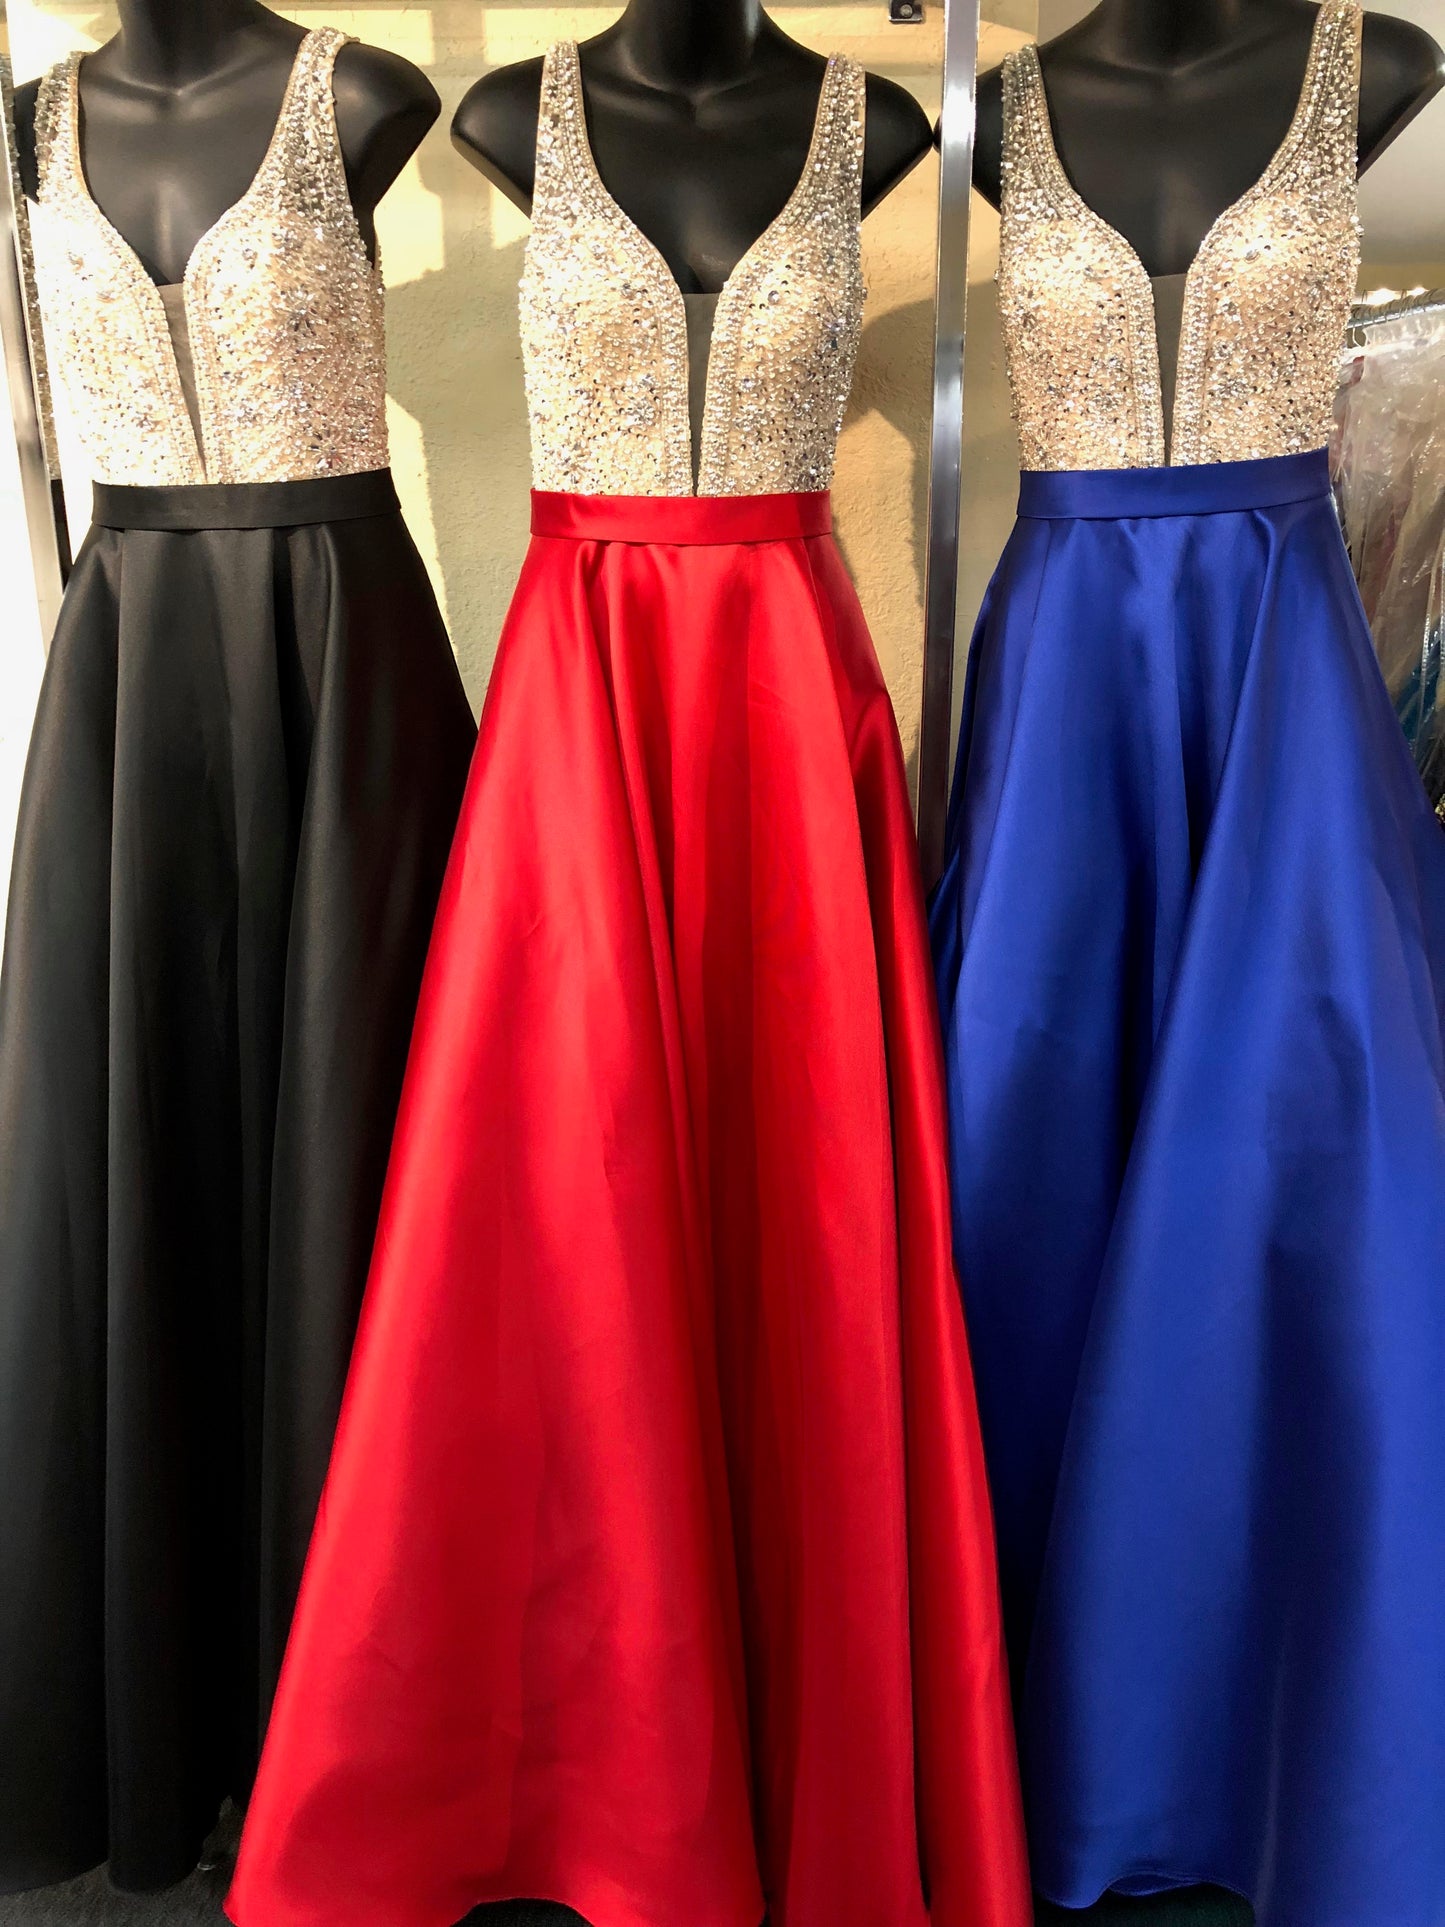 Jovani JVN60696 Size 4 ,12, 16 Black Prom Dress Ball Gown Pockets A Line Sheer